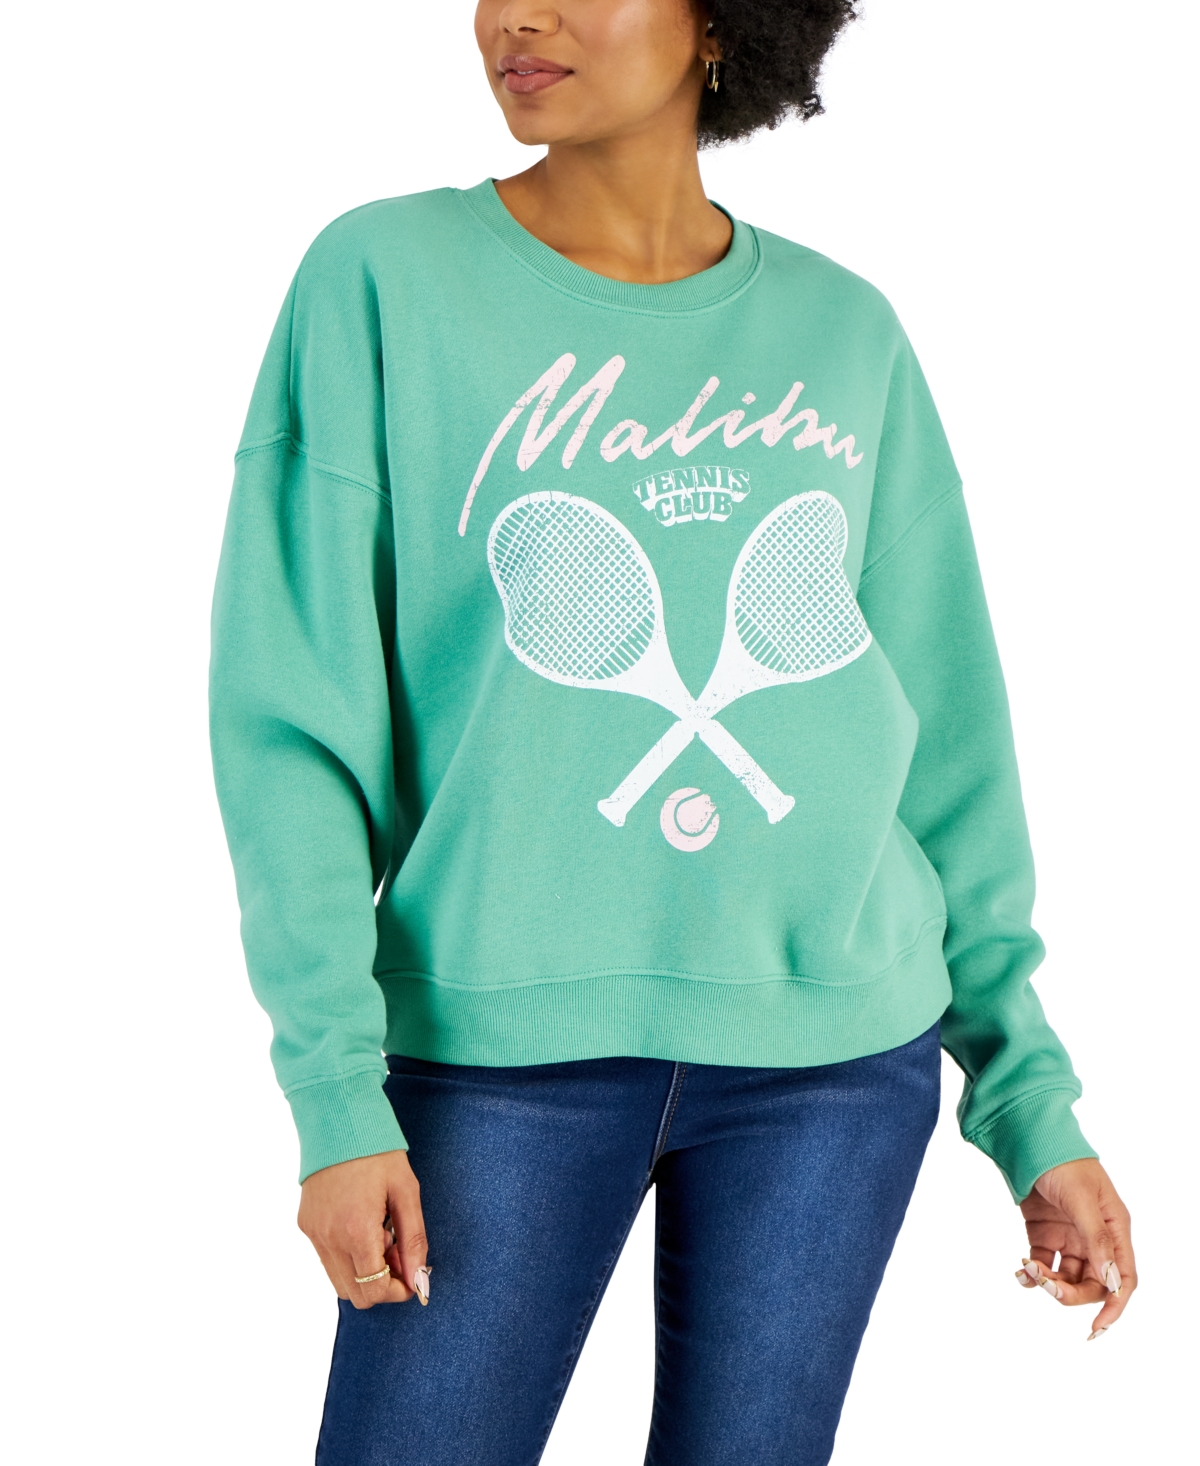 Grayson Threads Black Juniors' Malibu Tennis Club-Graphic Sweatshirt